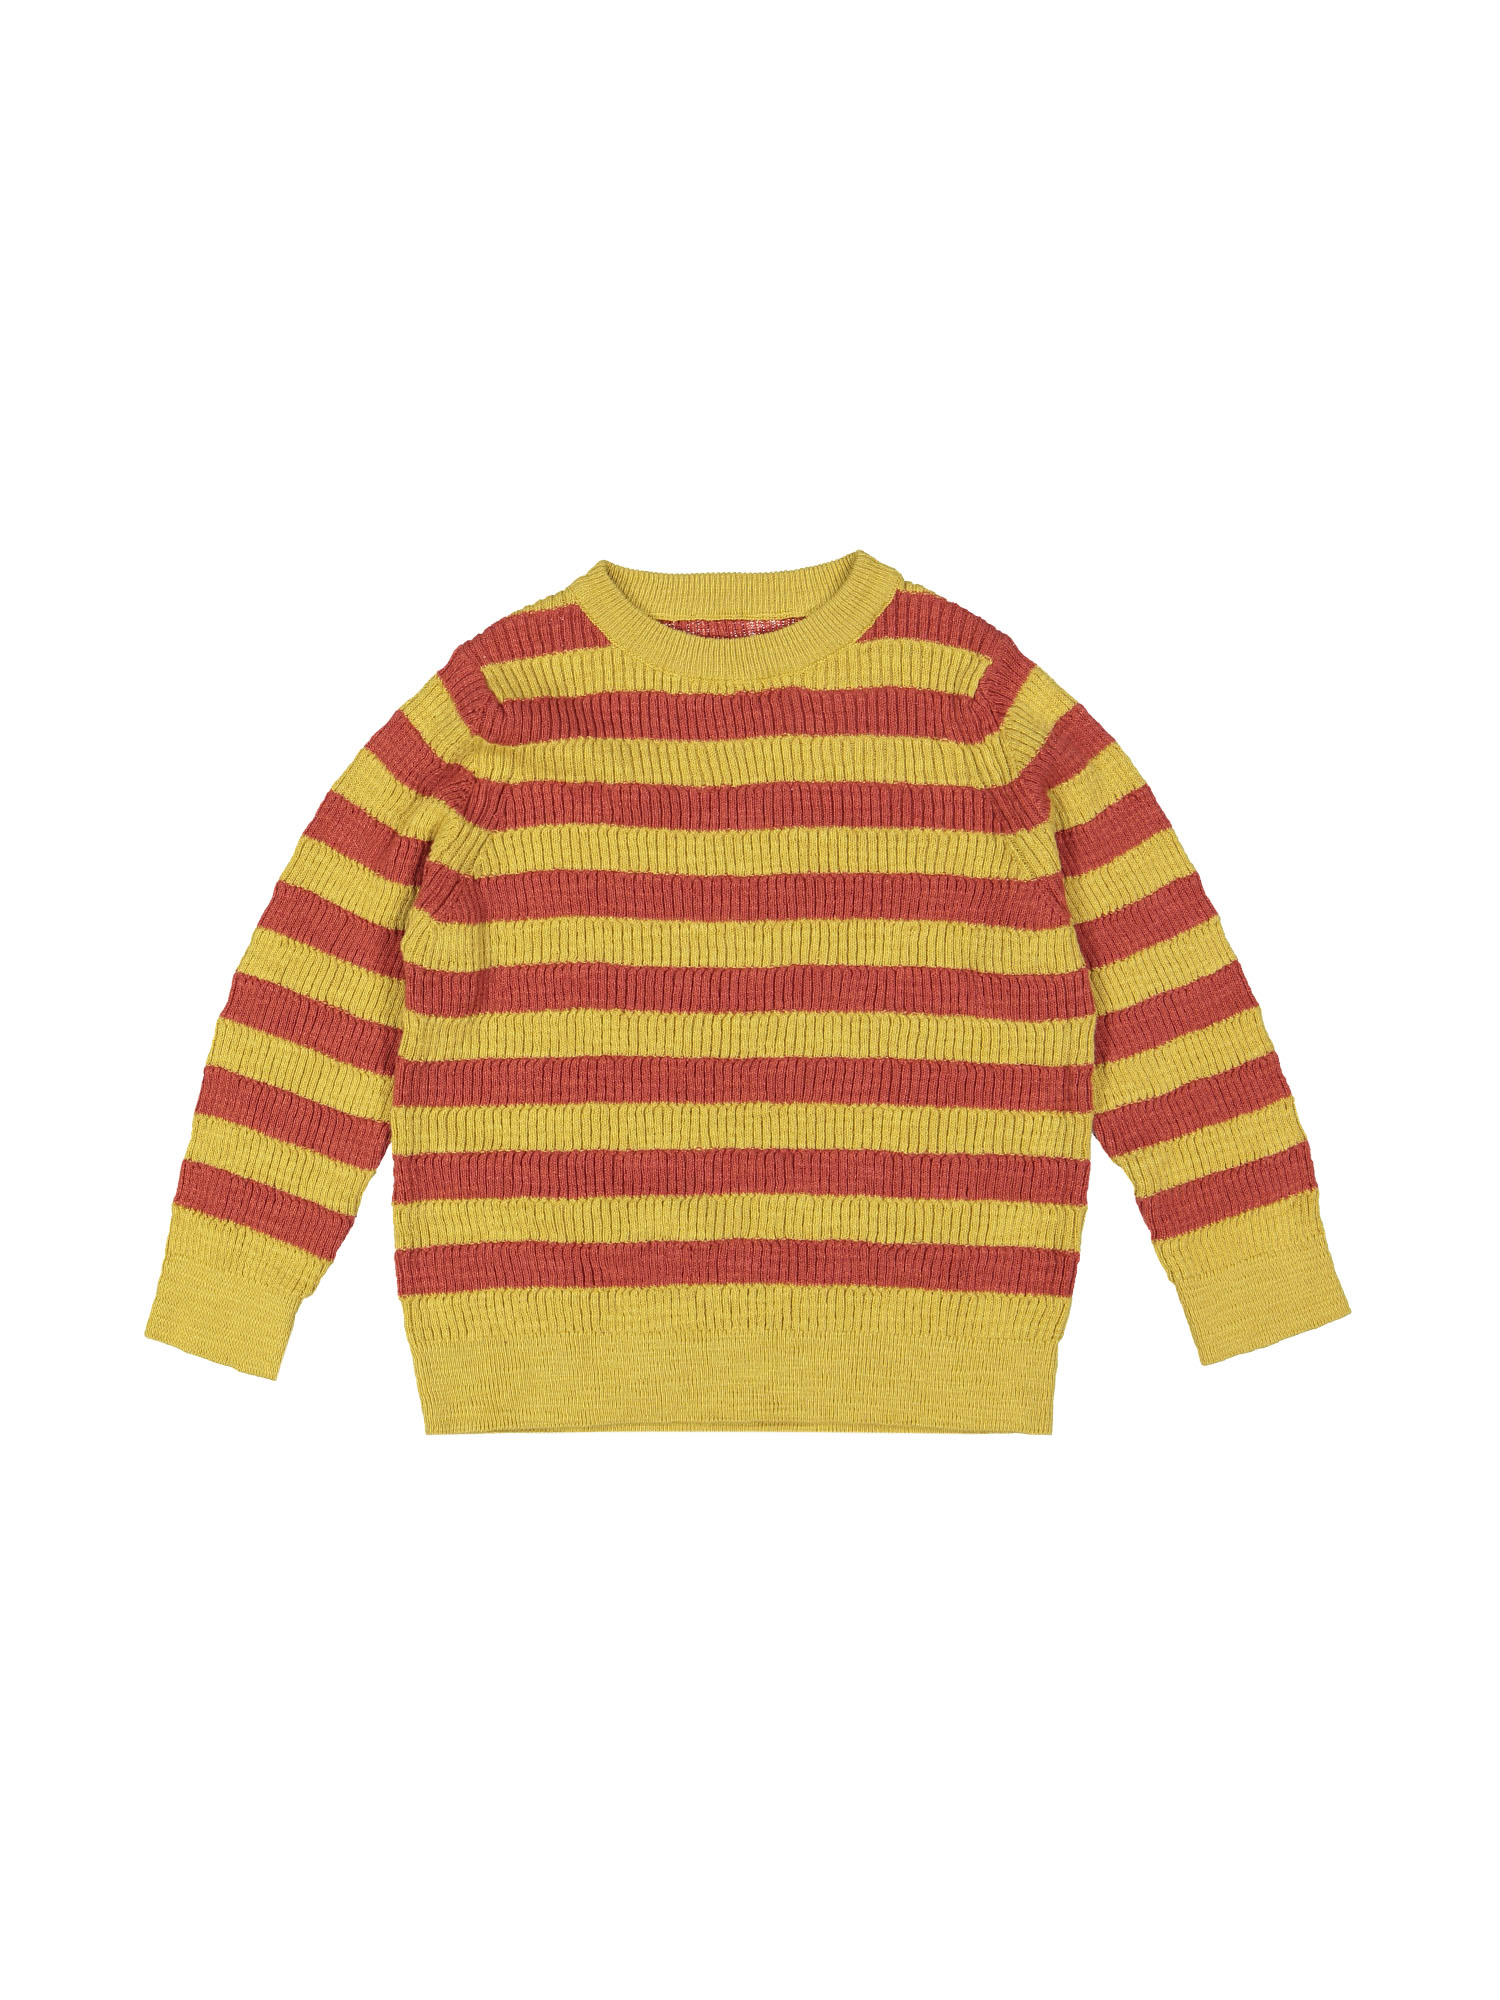 pull tricot stripes geel roodbruin 03j